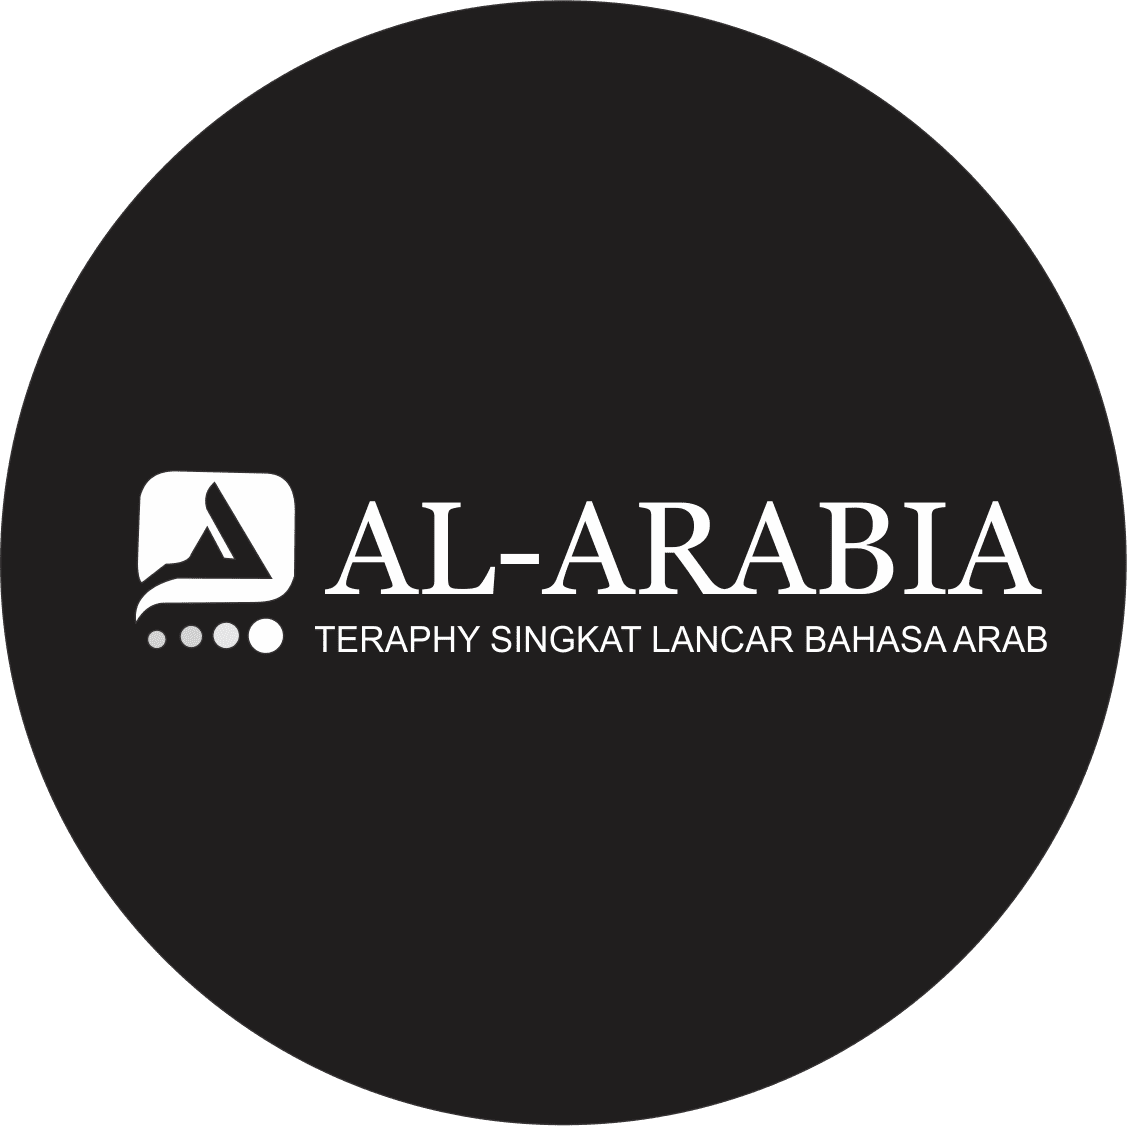 kursus bahasa arab pare Logo al arabia new (1)